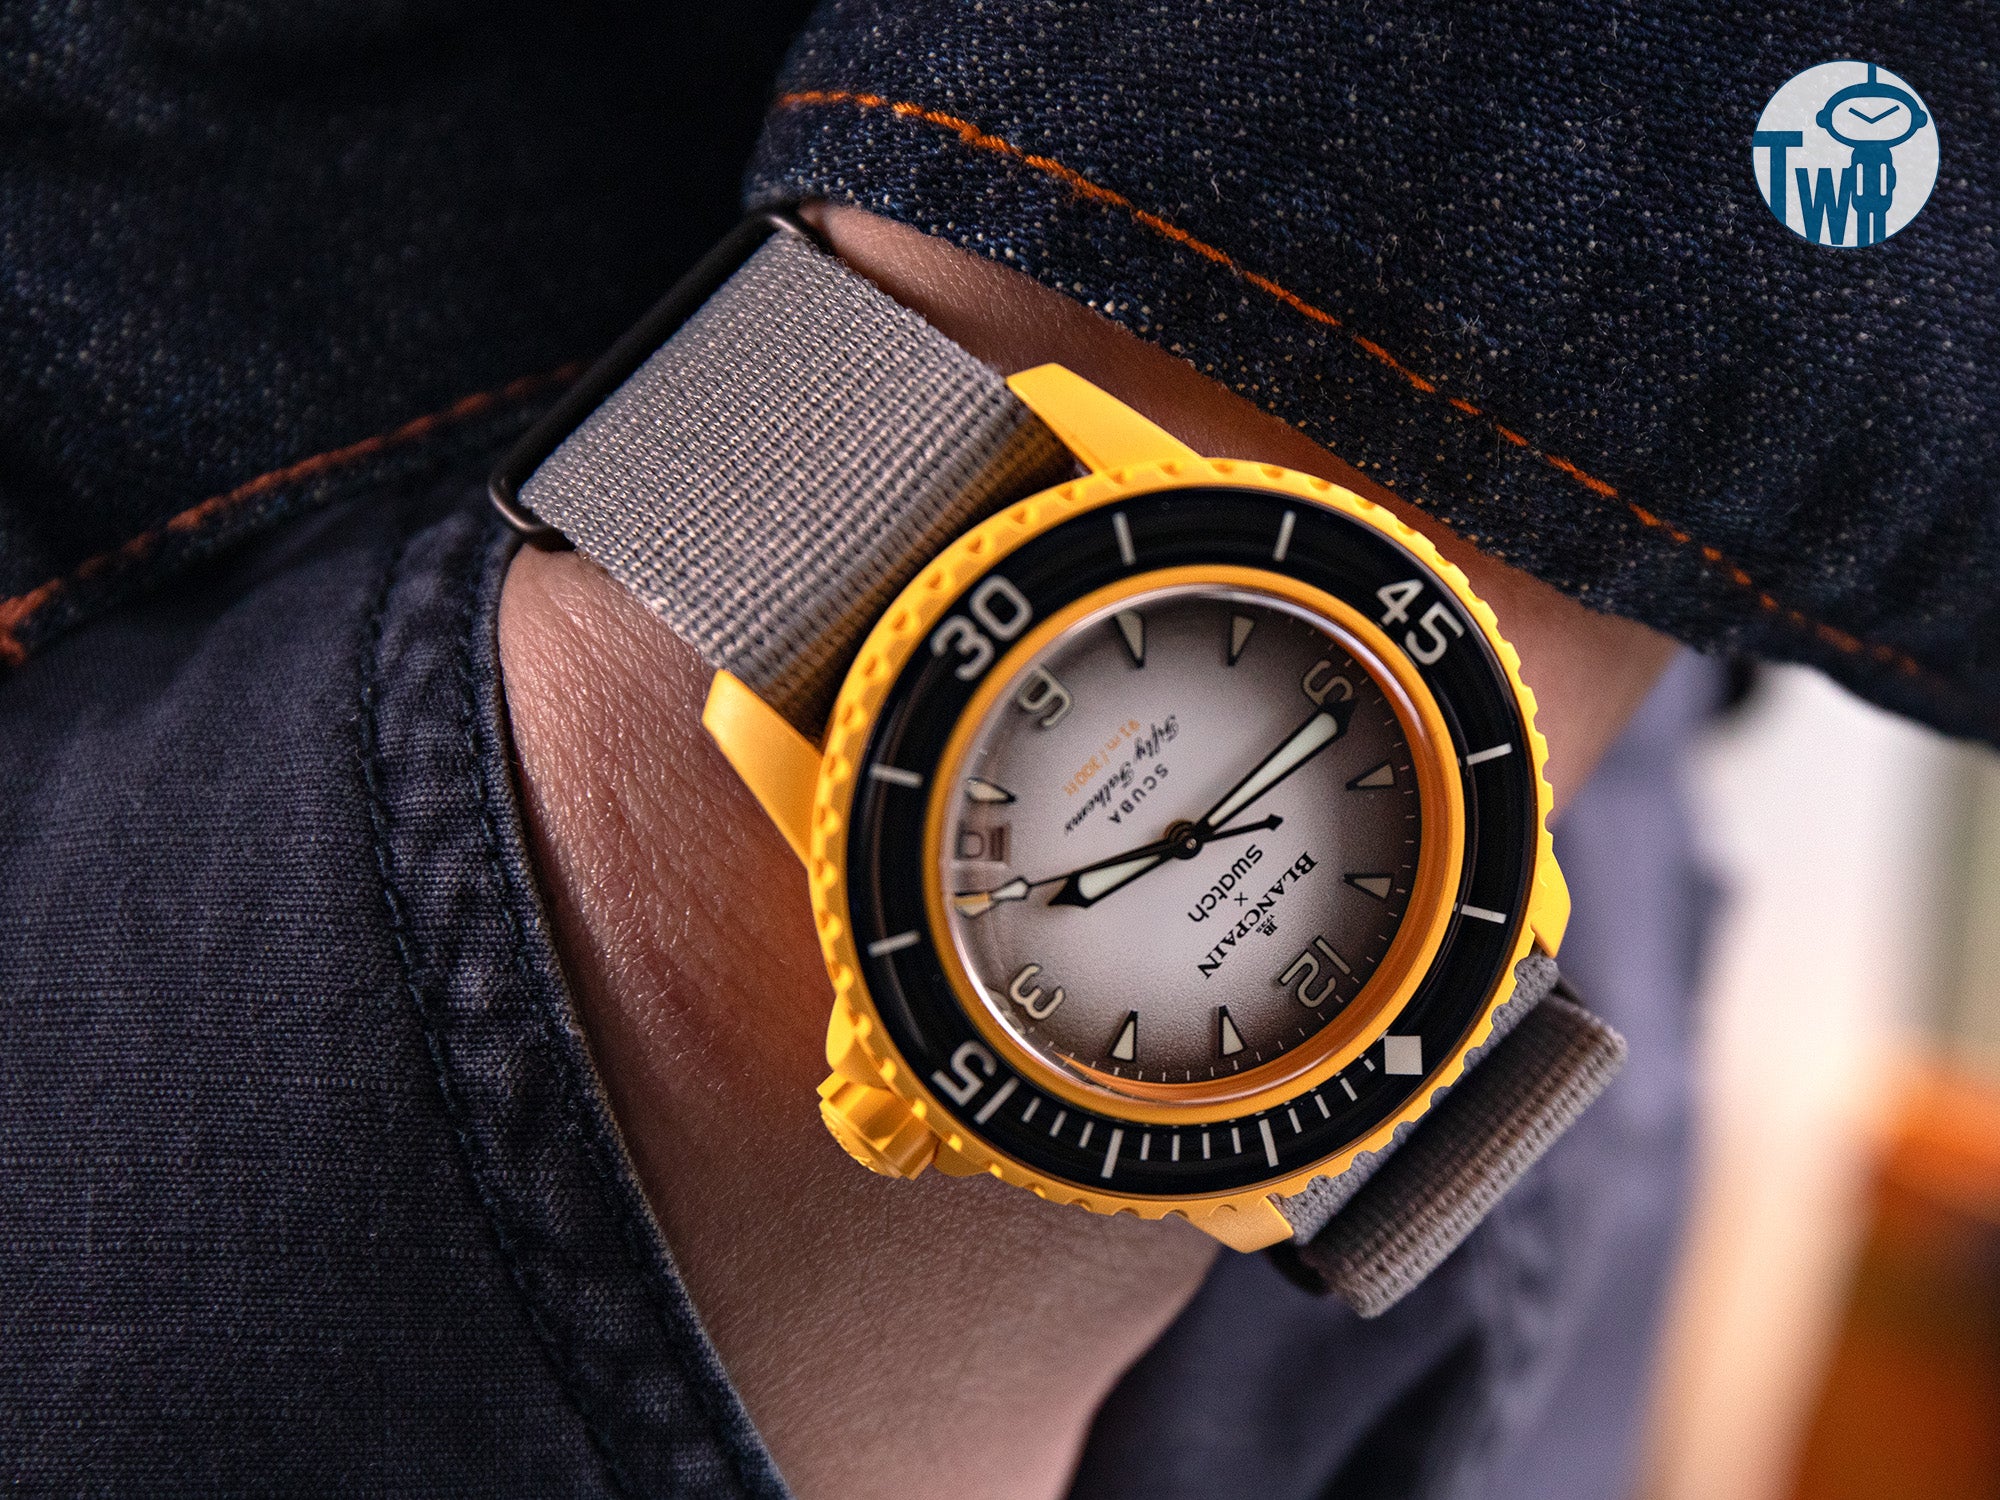 Blancpain X Swatch Scuba Fifty Fathoms手錶搭配太空人腕時計TW手錶帶的Nato錶帶款式。